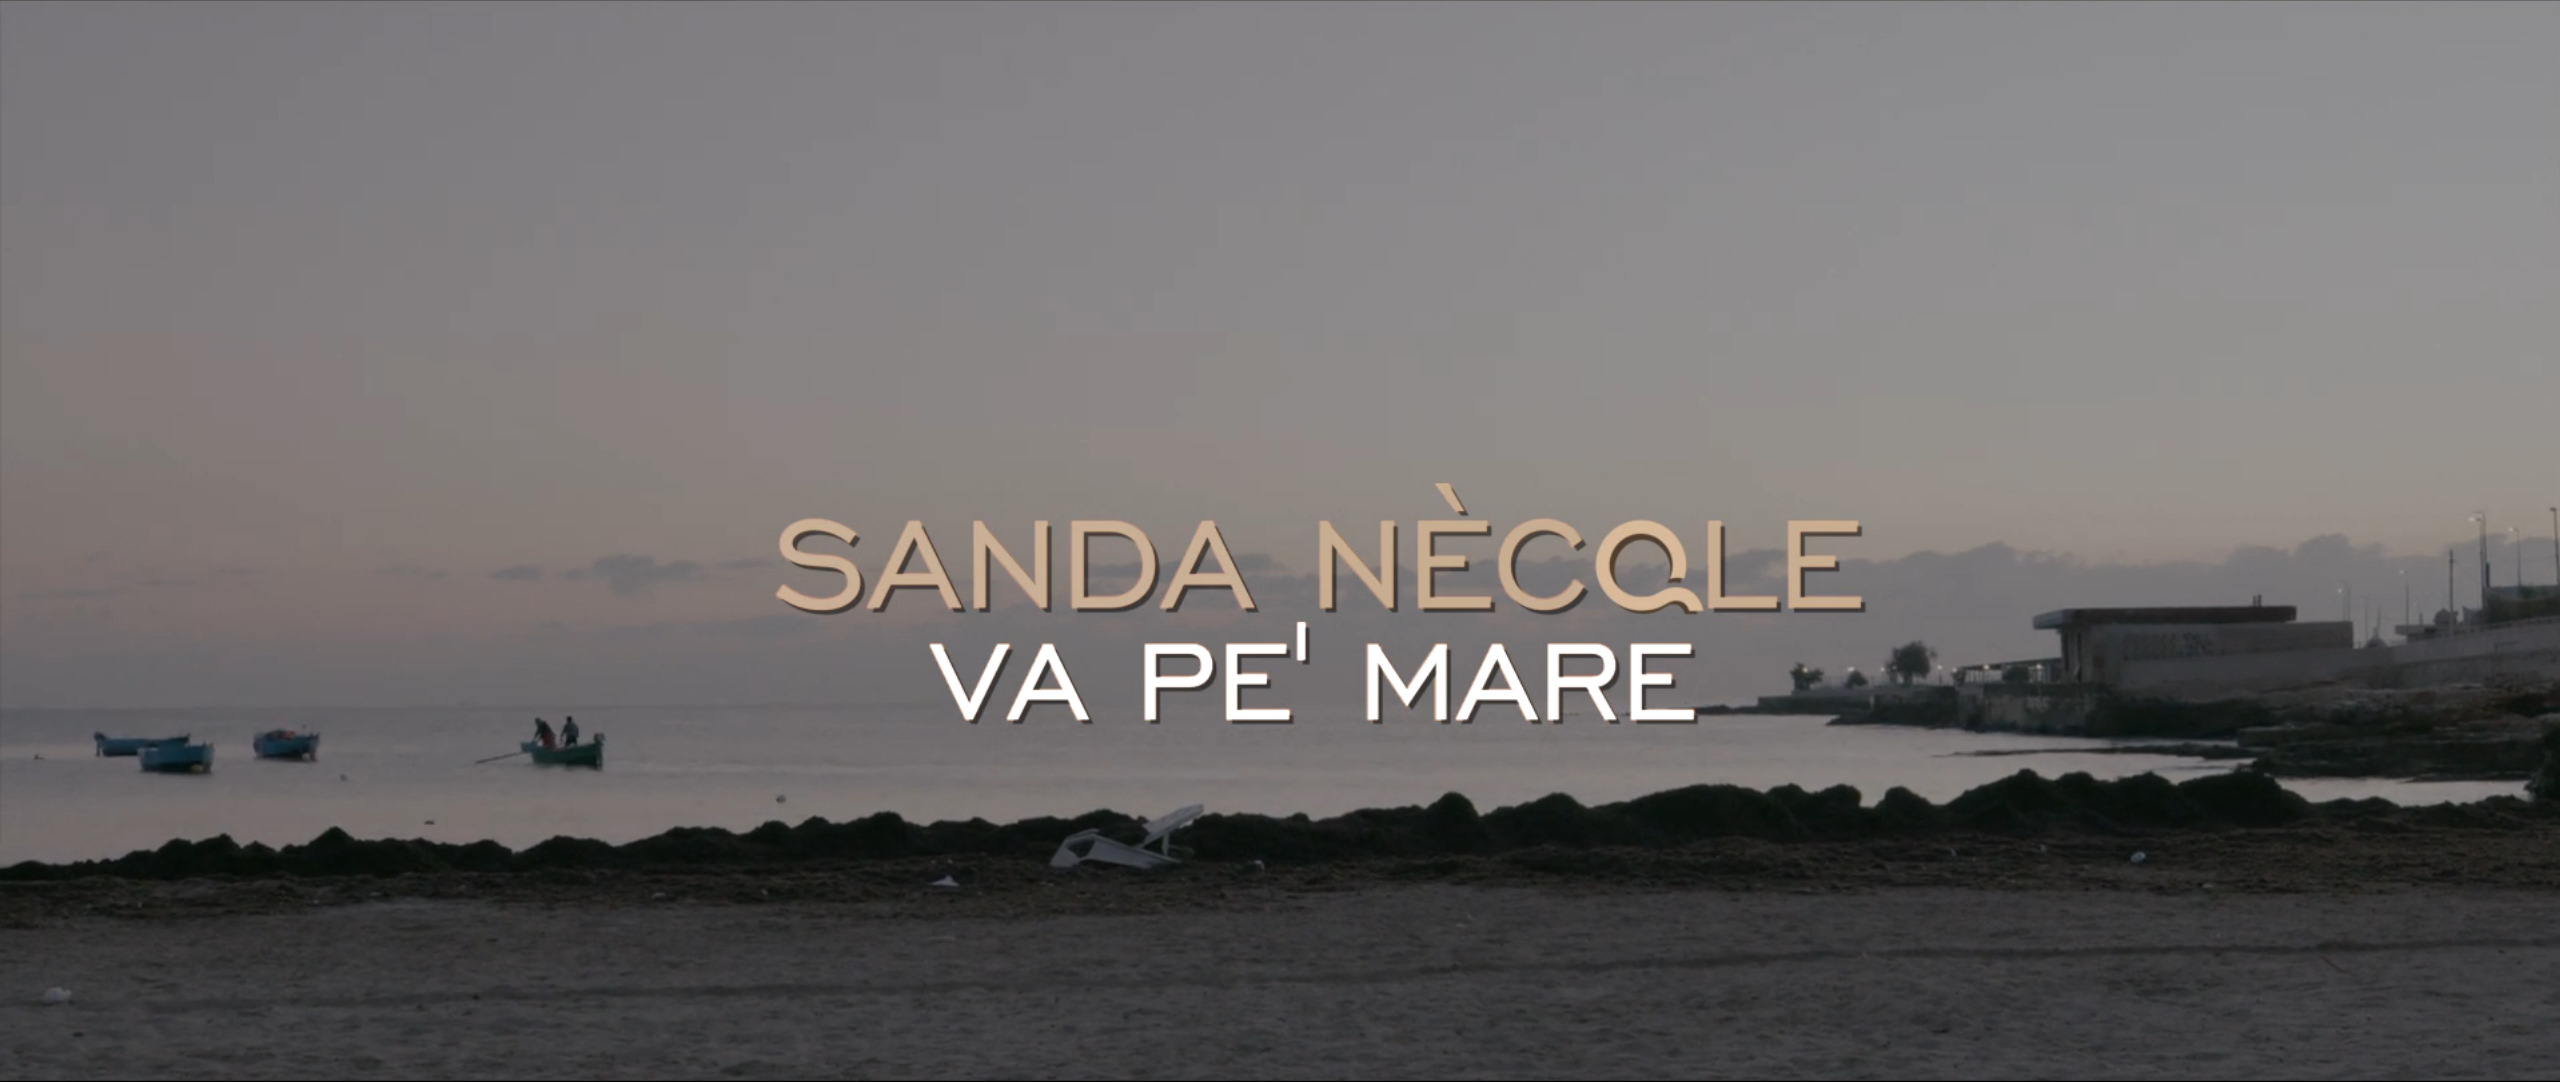 Quadraccio & Baribanda | Backstage "Sande Nicole va pe mare"